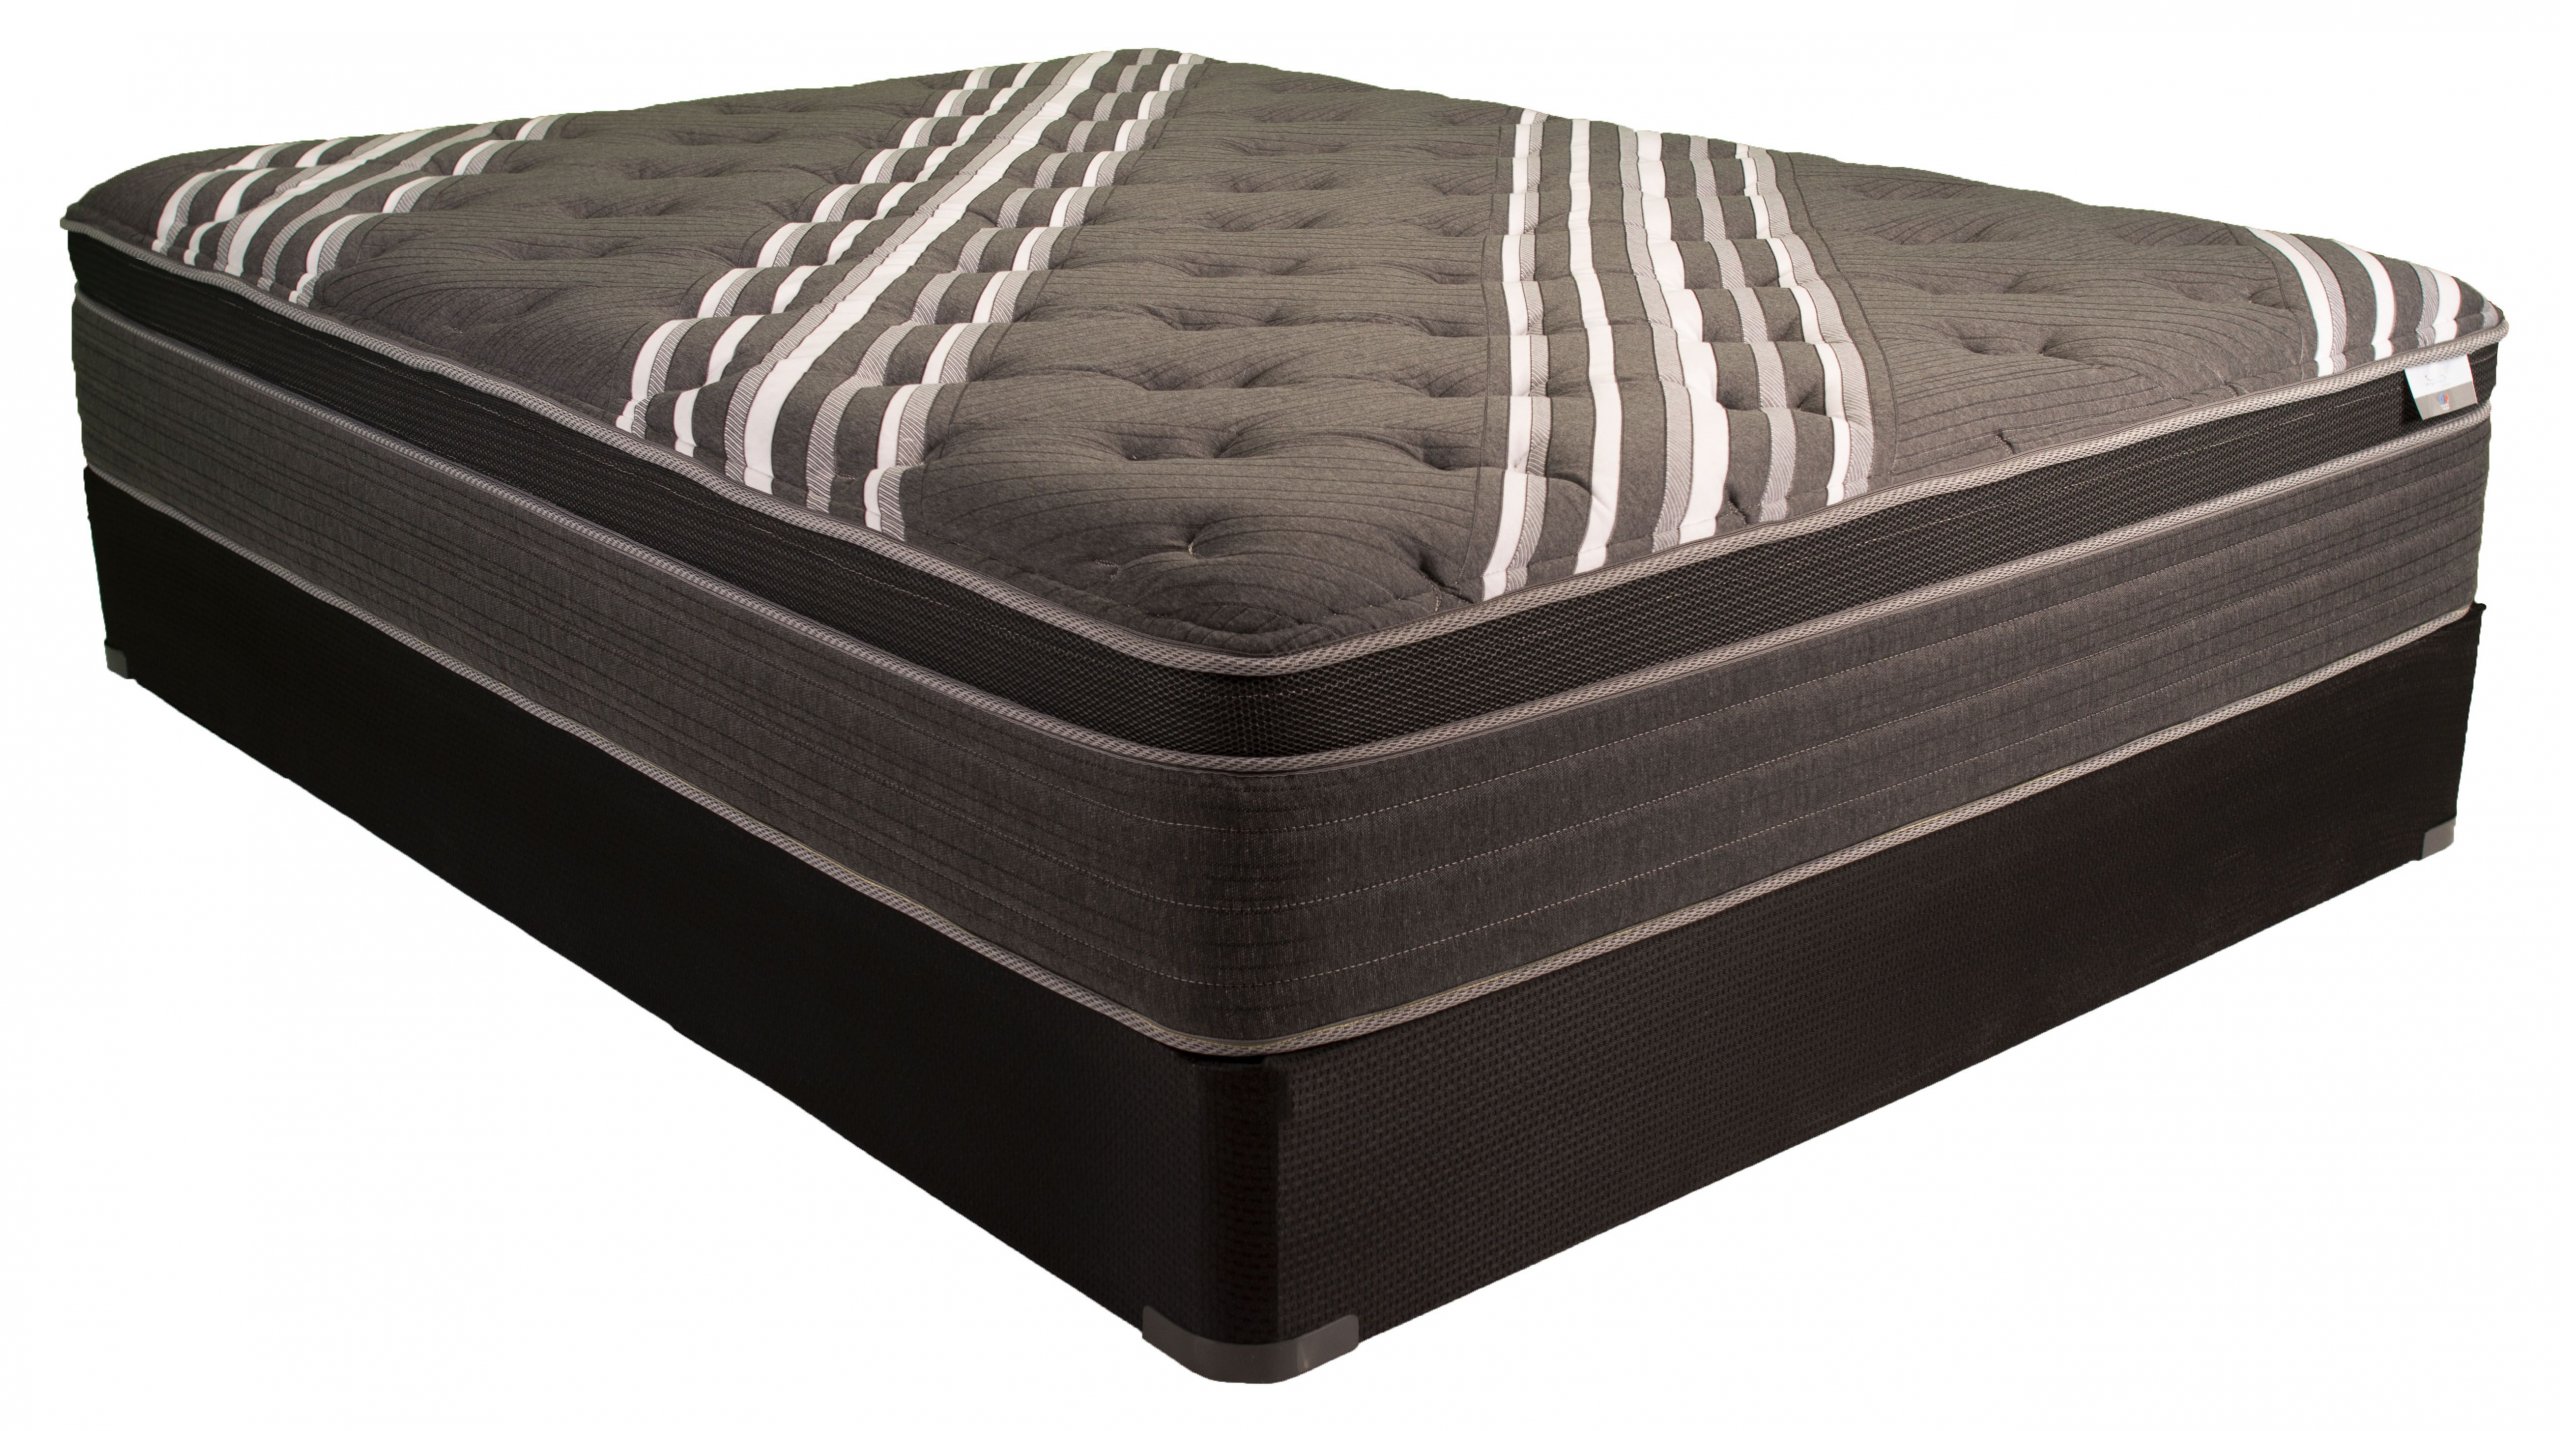 the acclaim 8 memory foam mattress